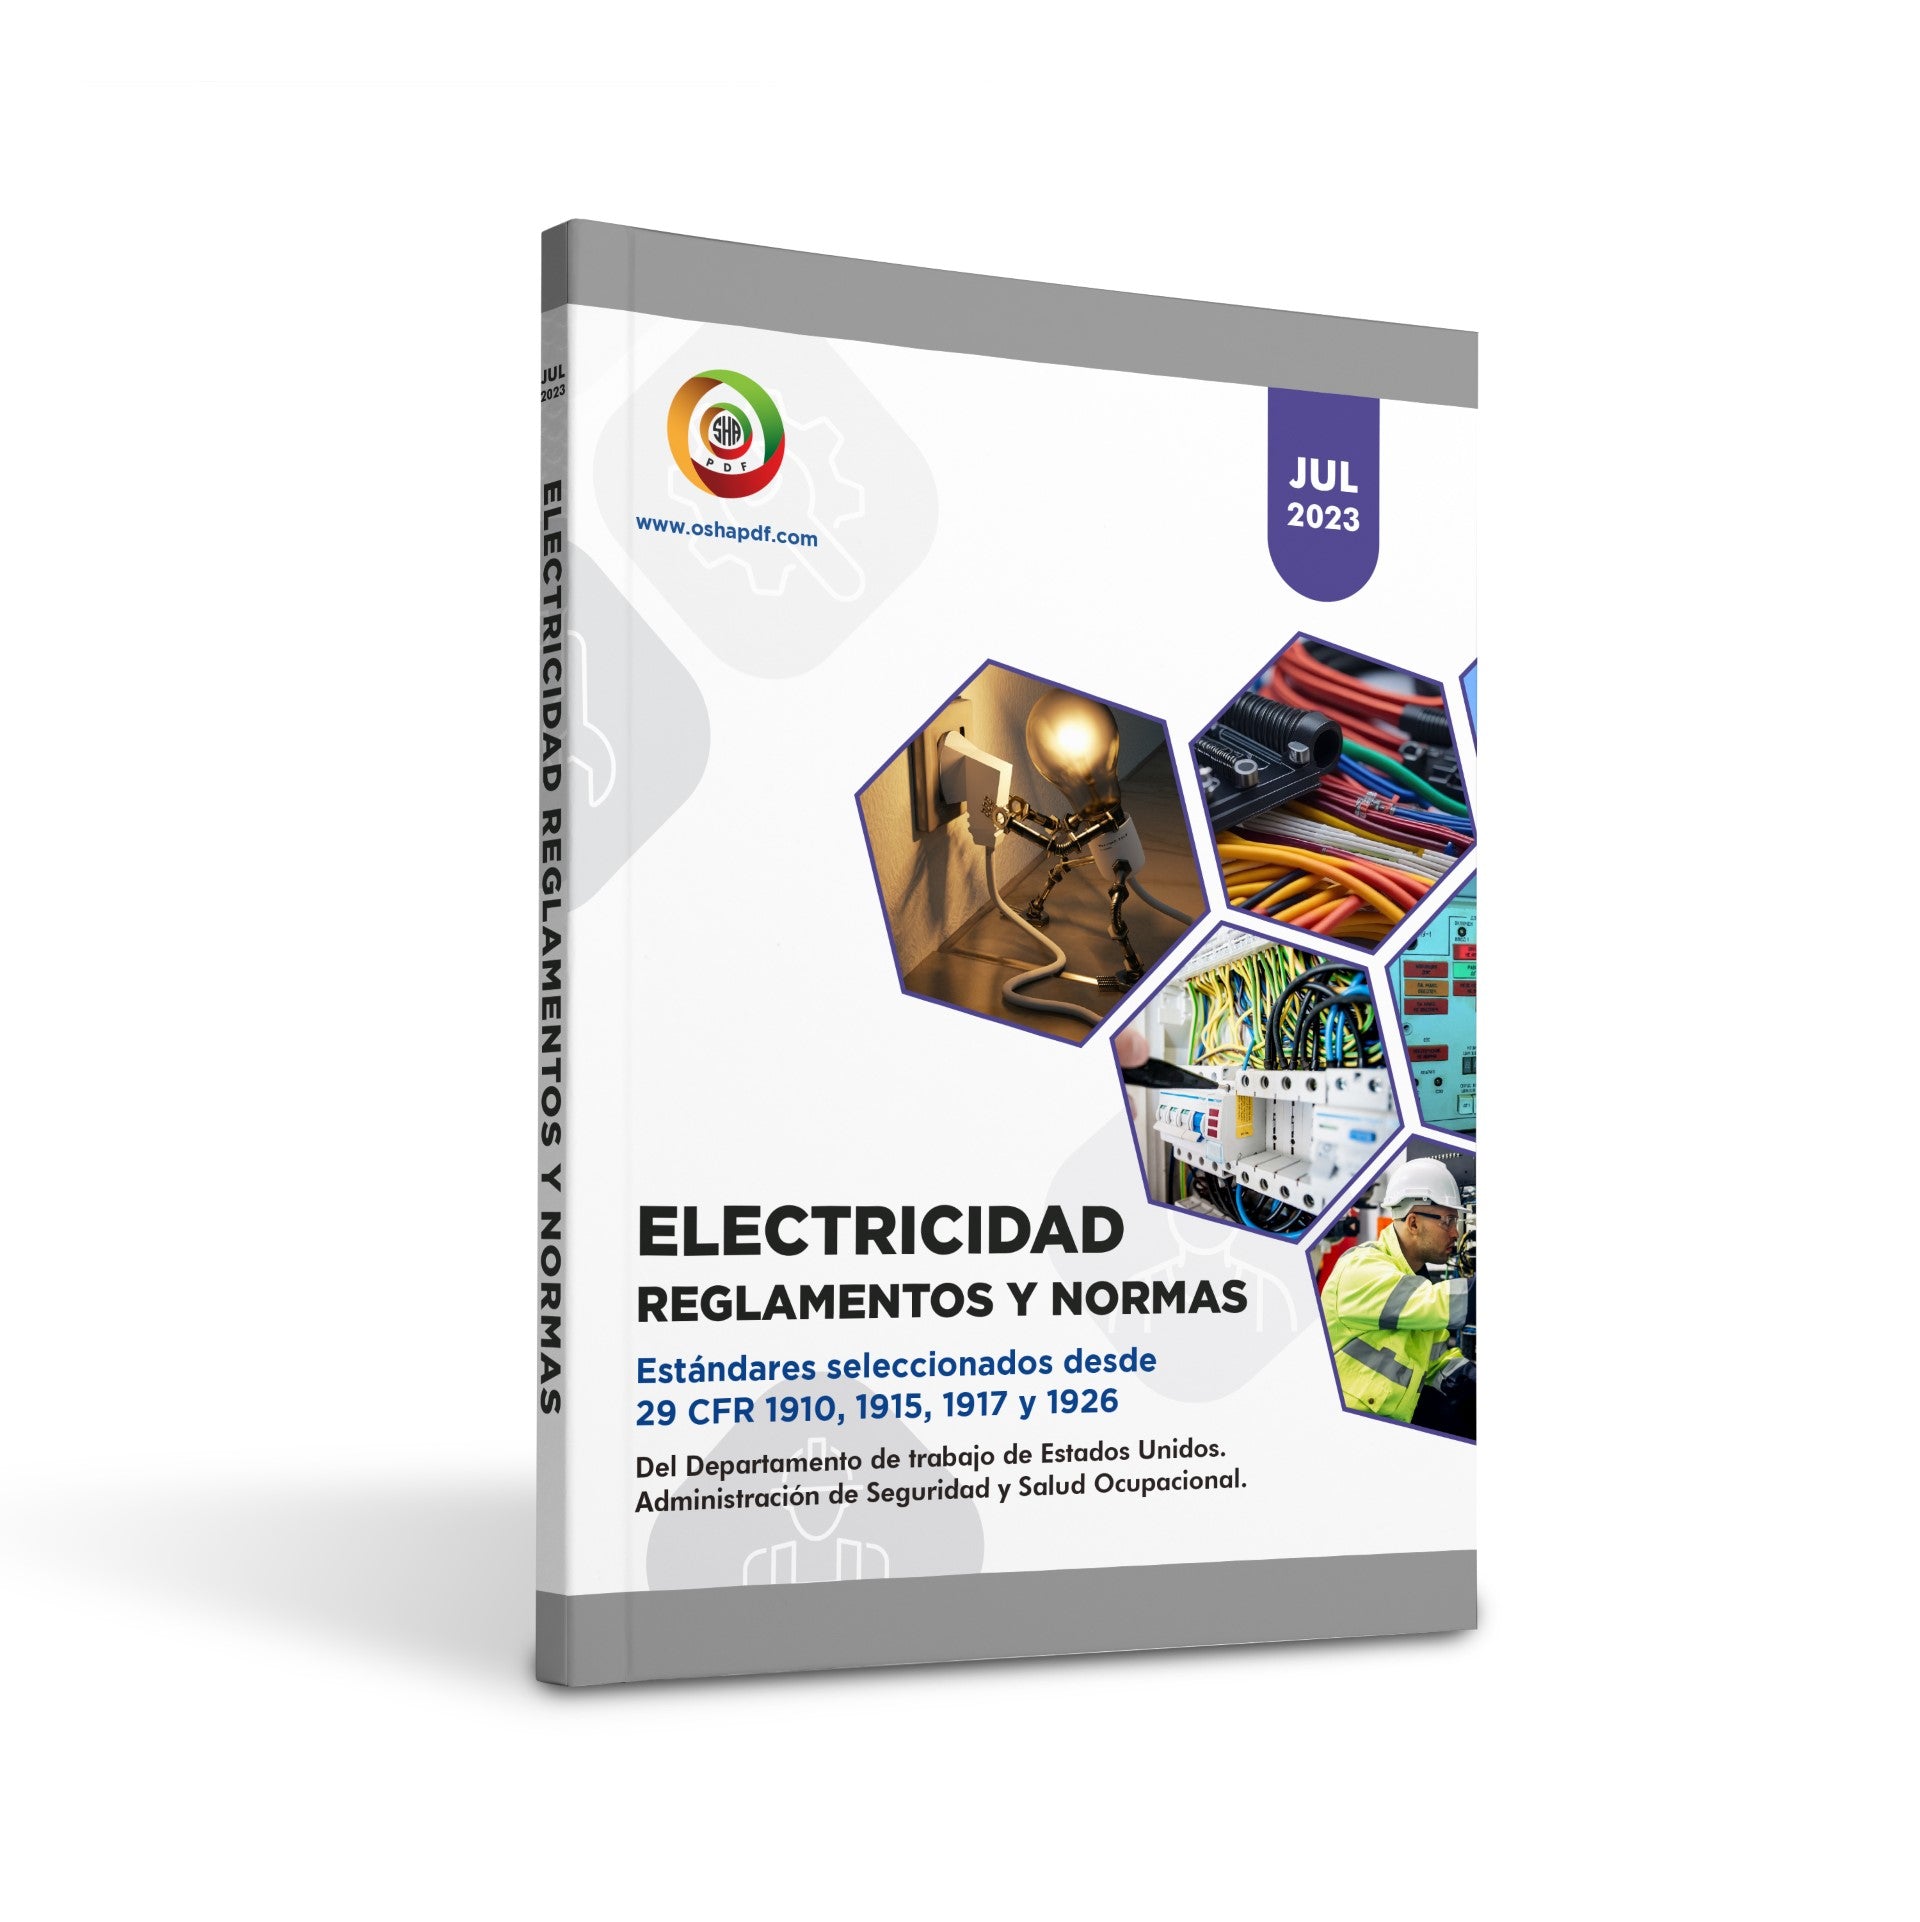 OSHA Electrical Regulations Book - July 2023